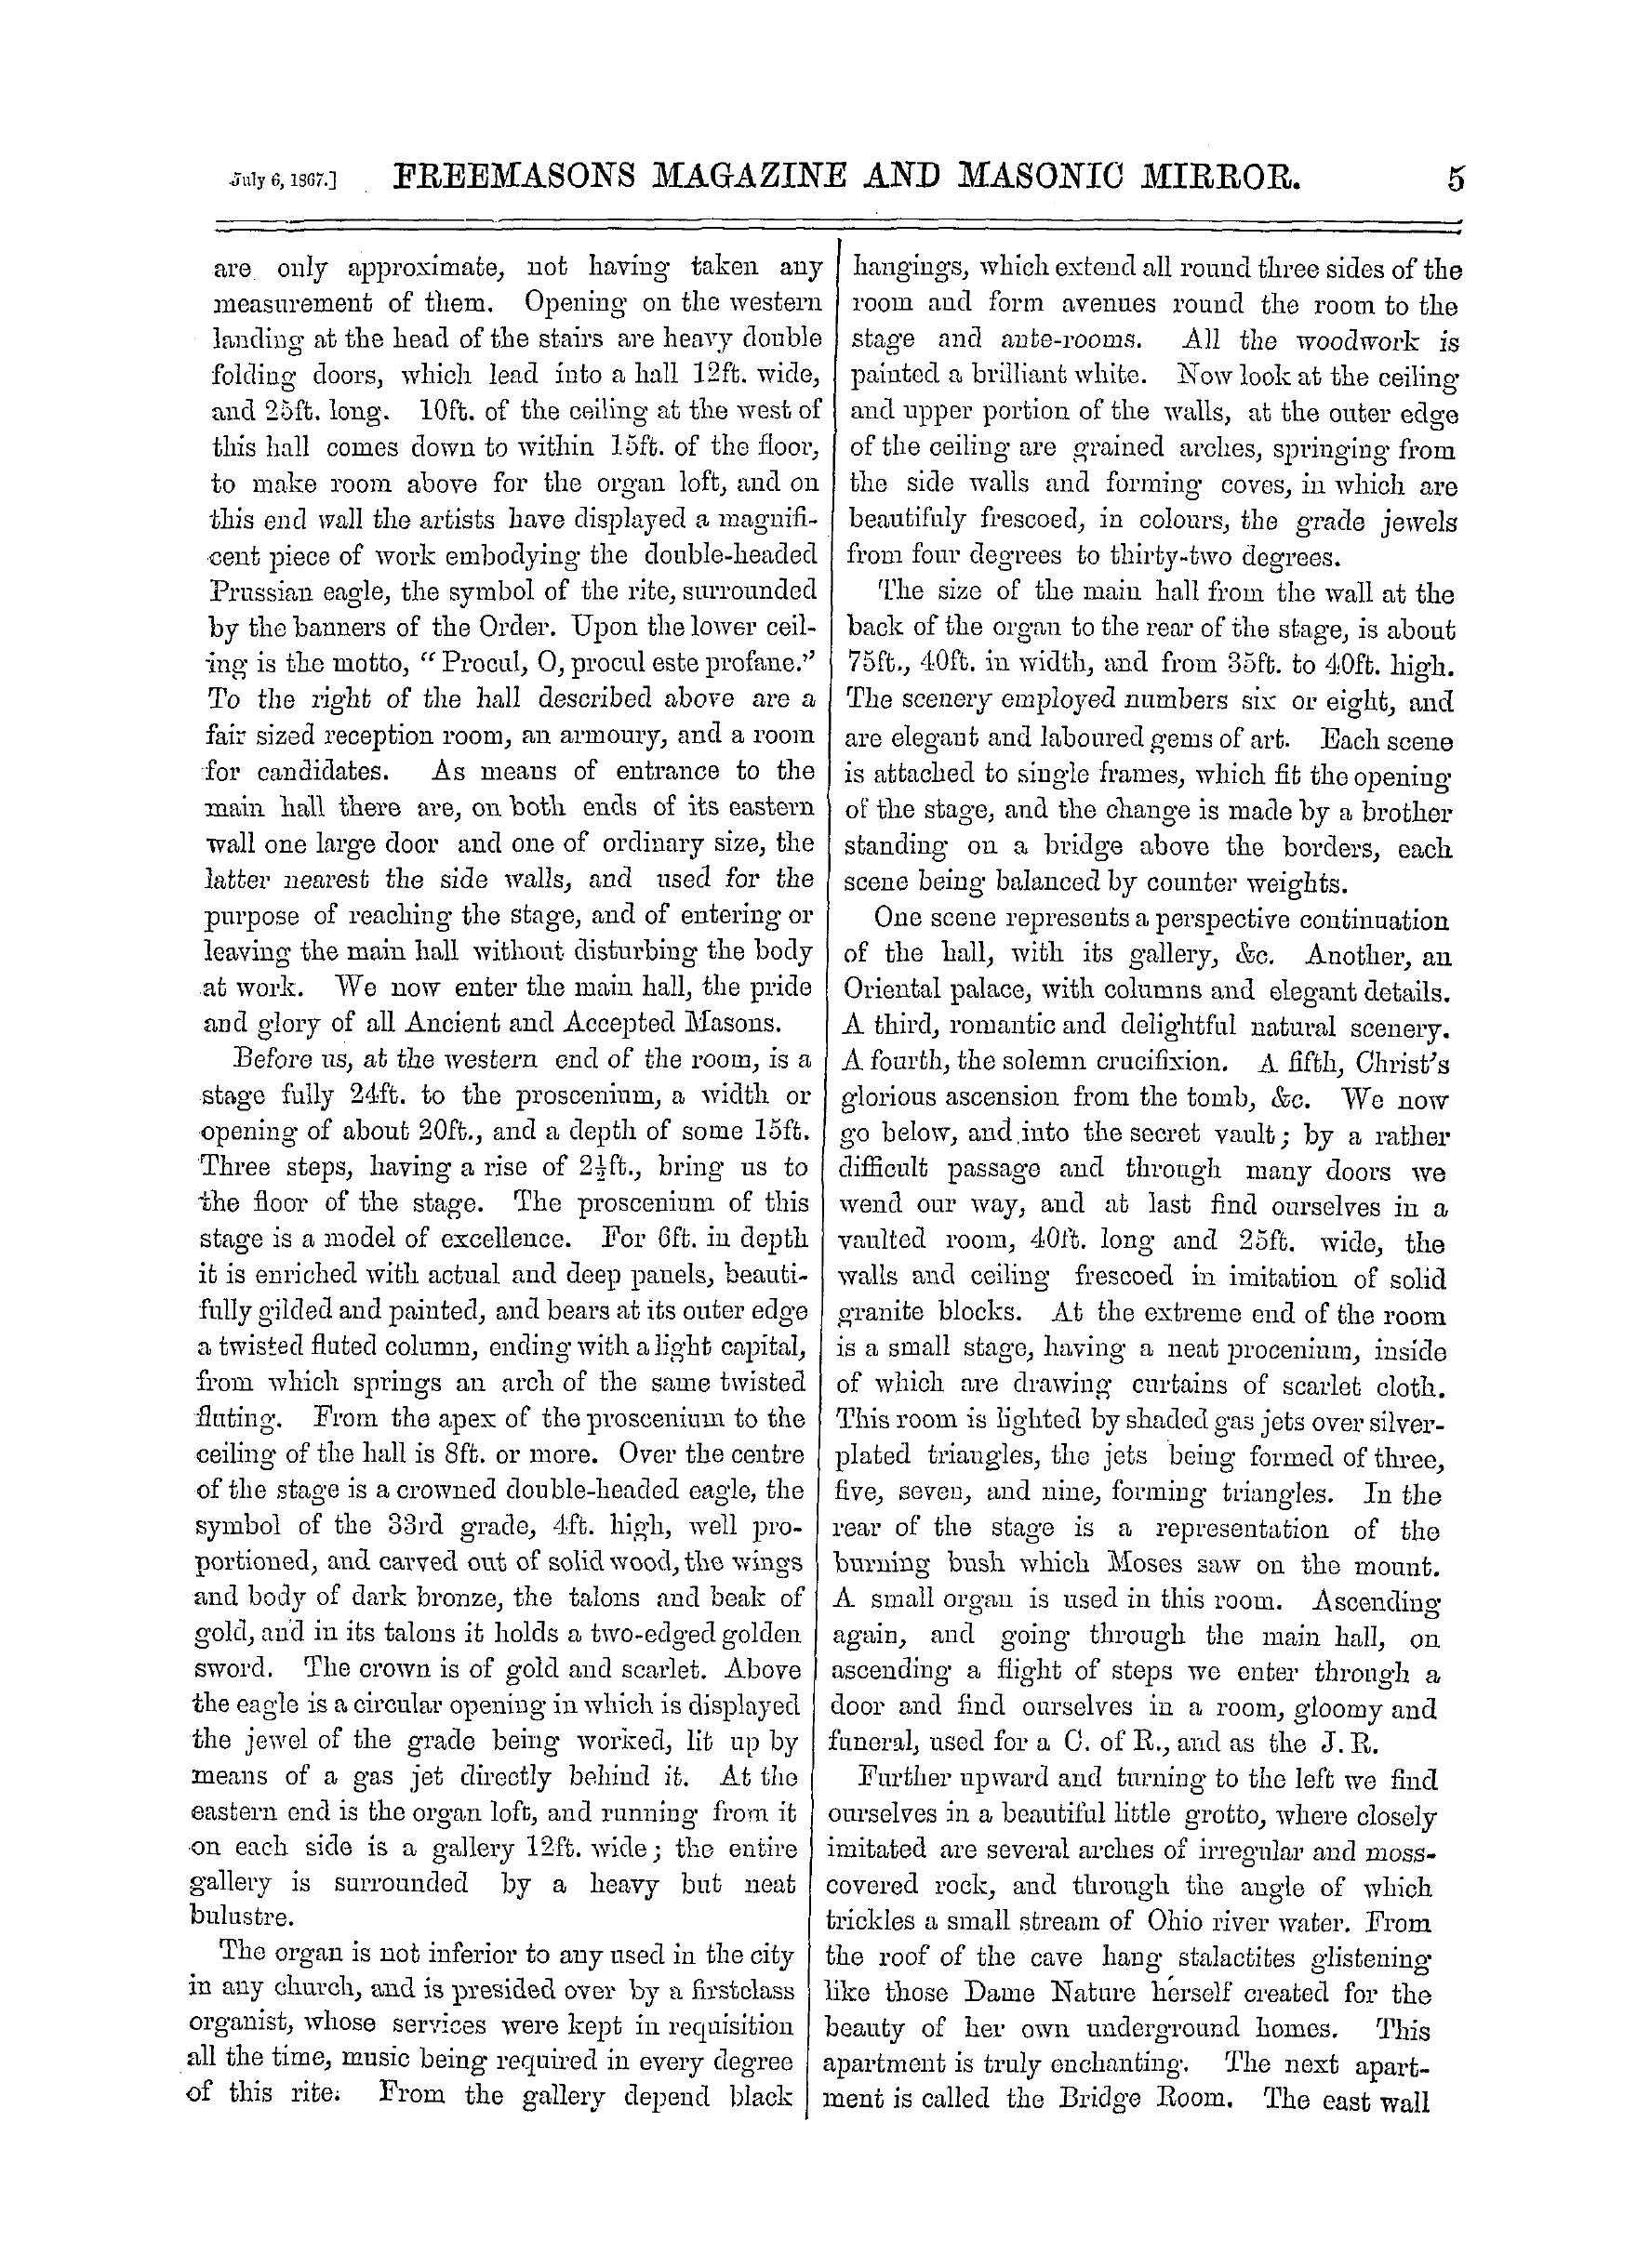 The Freemasons' Monthly Magazine: 1867-07-06 - Visit To Cincinnati, Ohio.